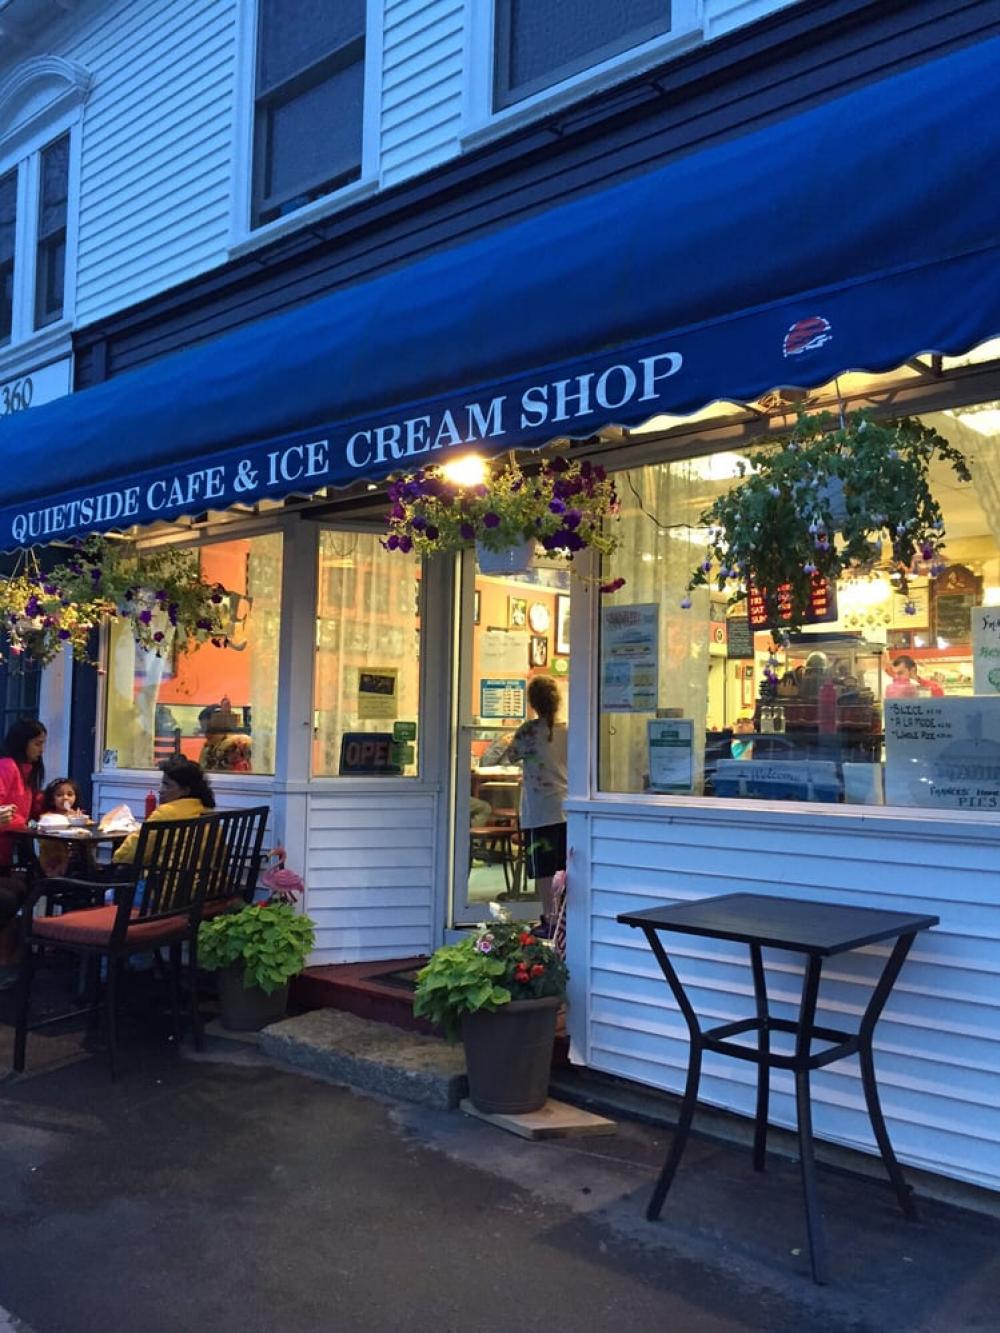 Quietside Cafe / Ice Cream Shop